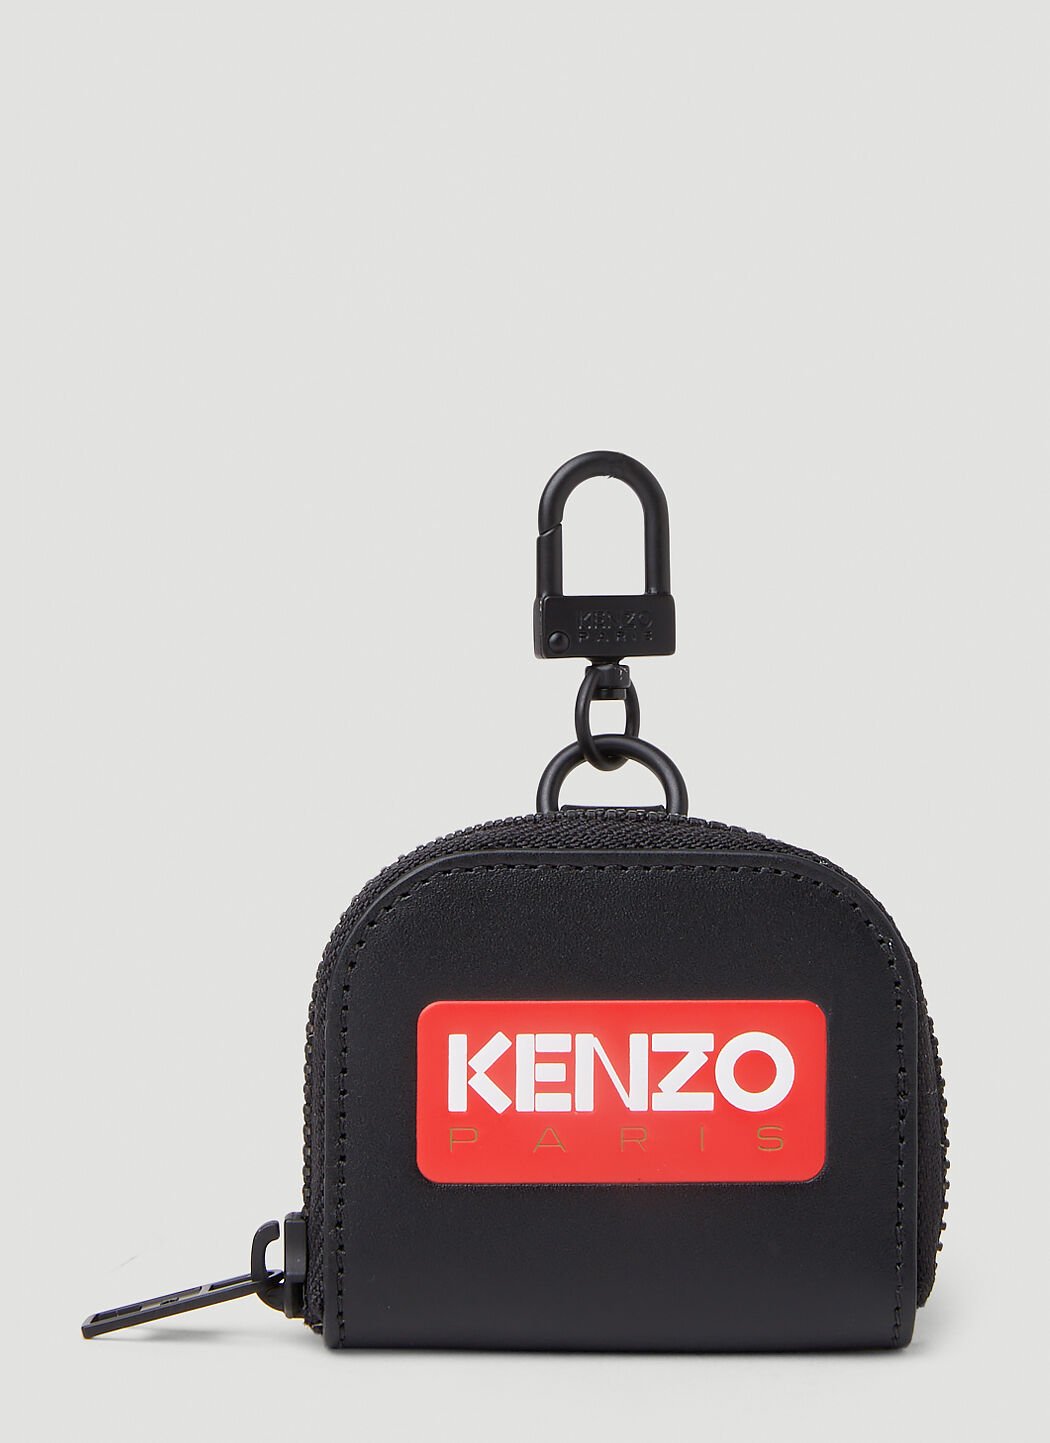 Kenzo ロゴパッチ AirPodsケース グリーン knz0253017